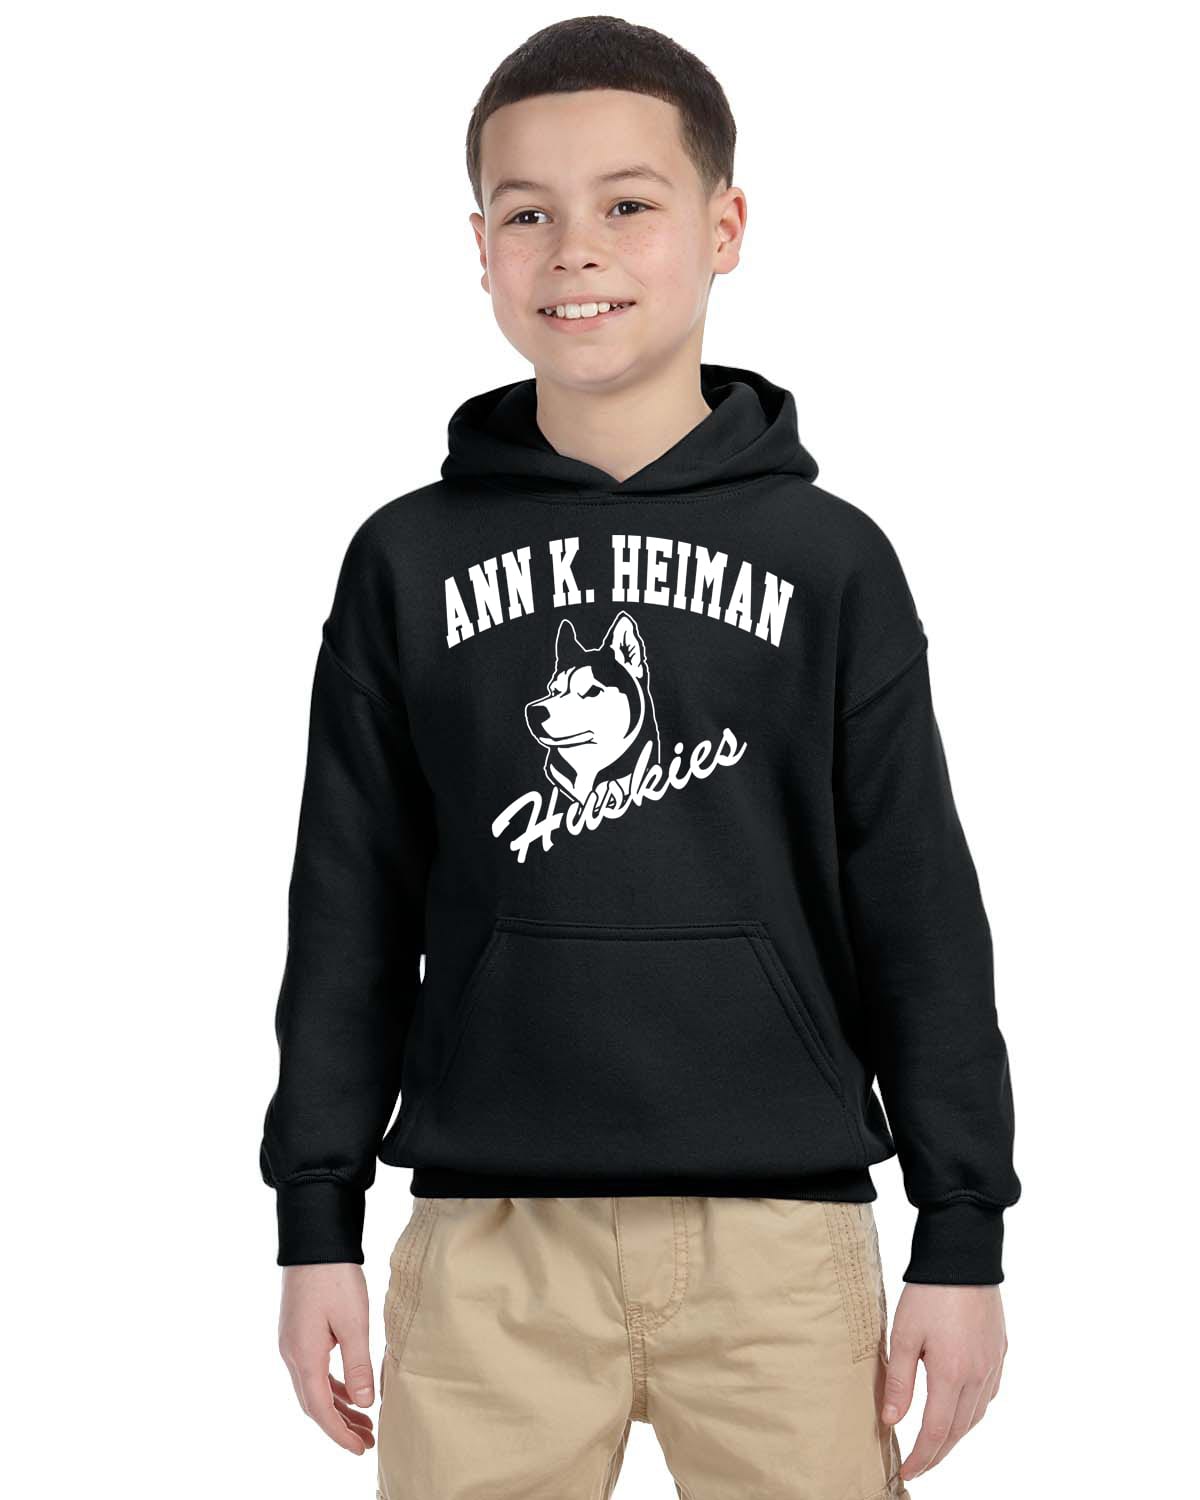 Heiman Elementary School Youth Black Fleece Pullover Hooded Sweatshirt